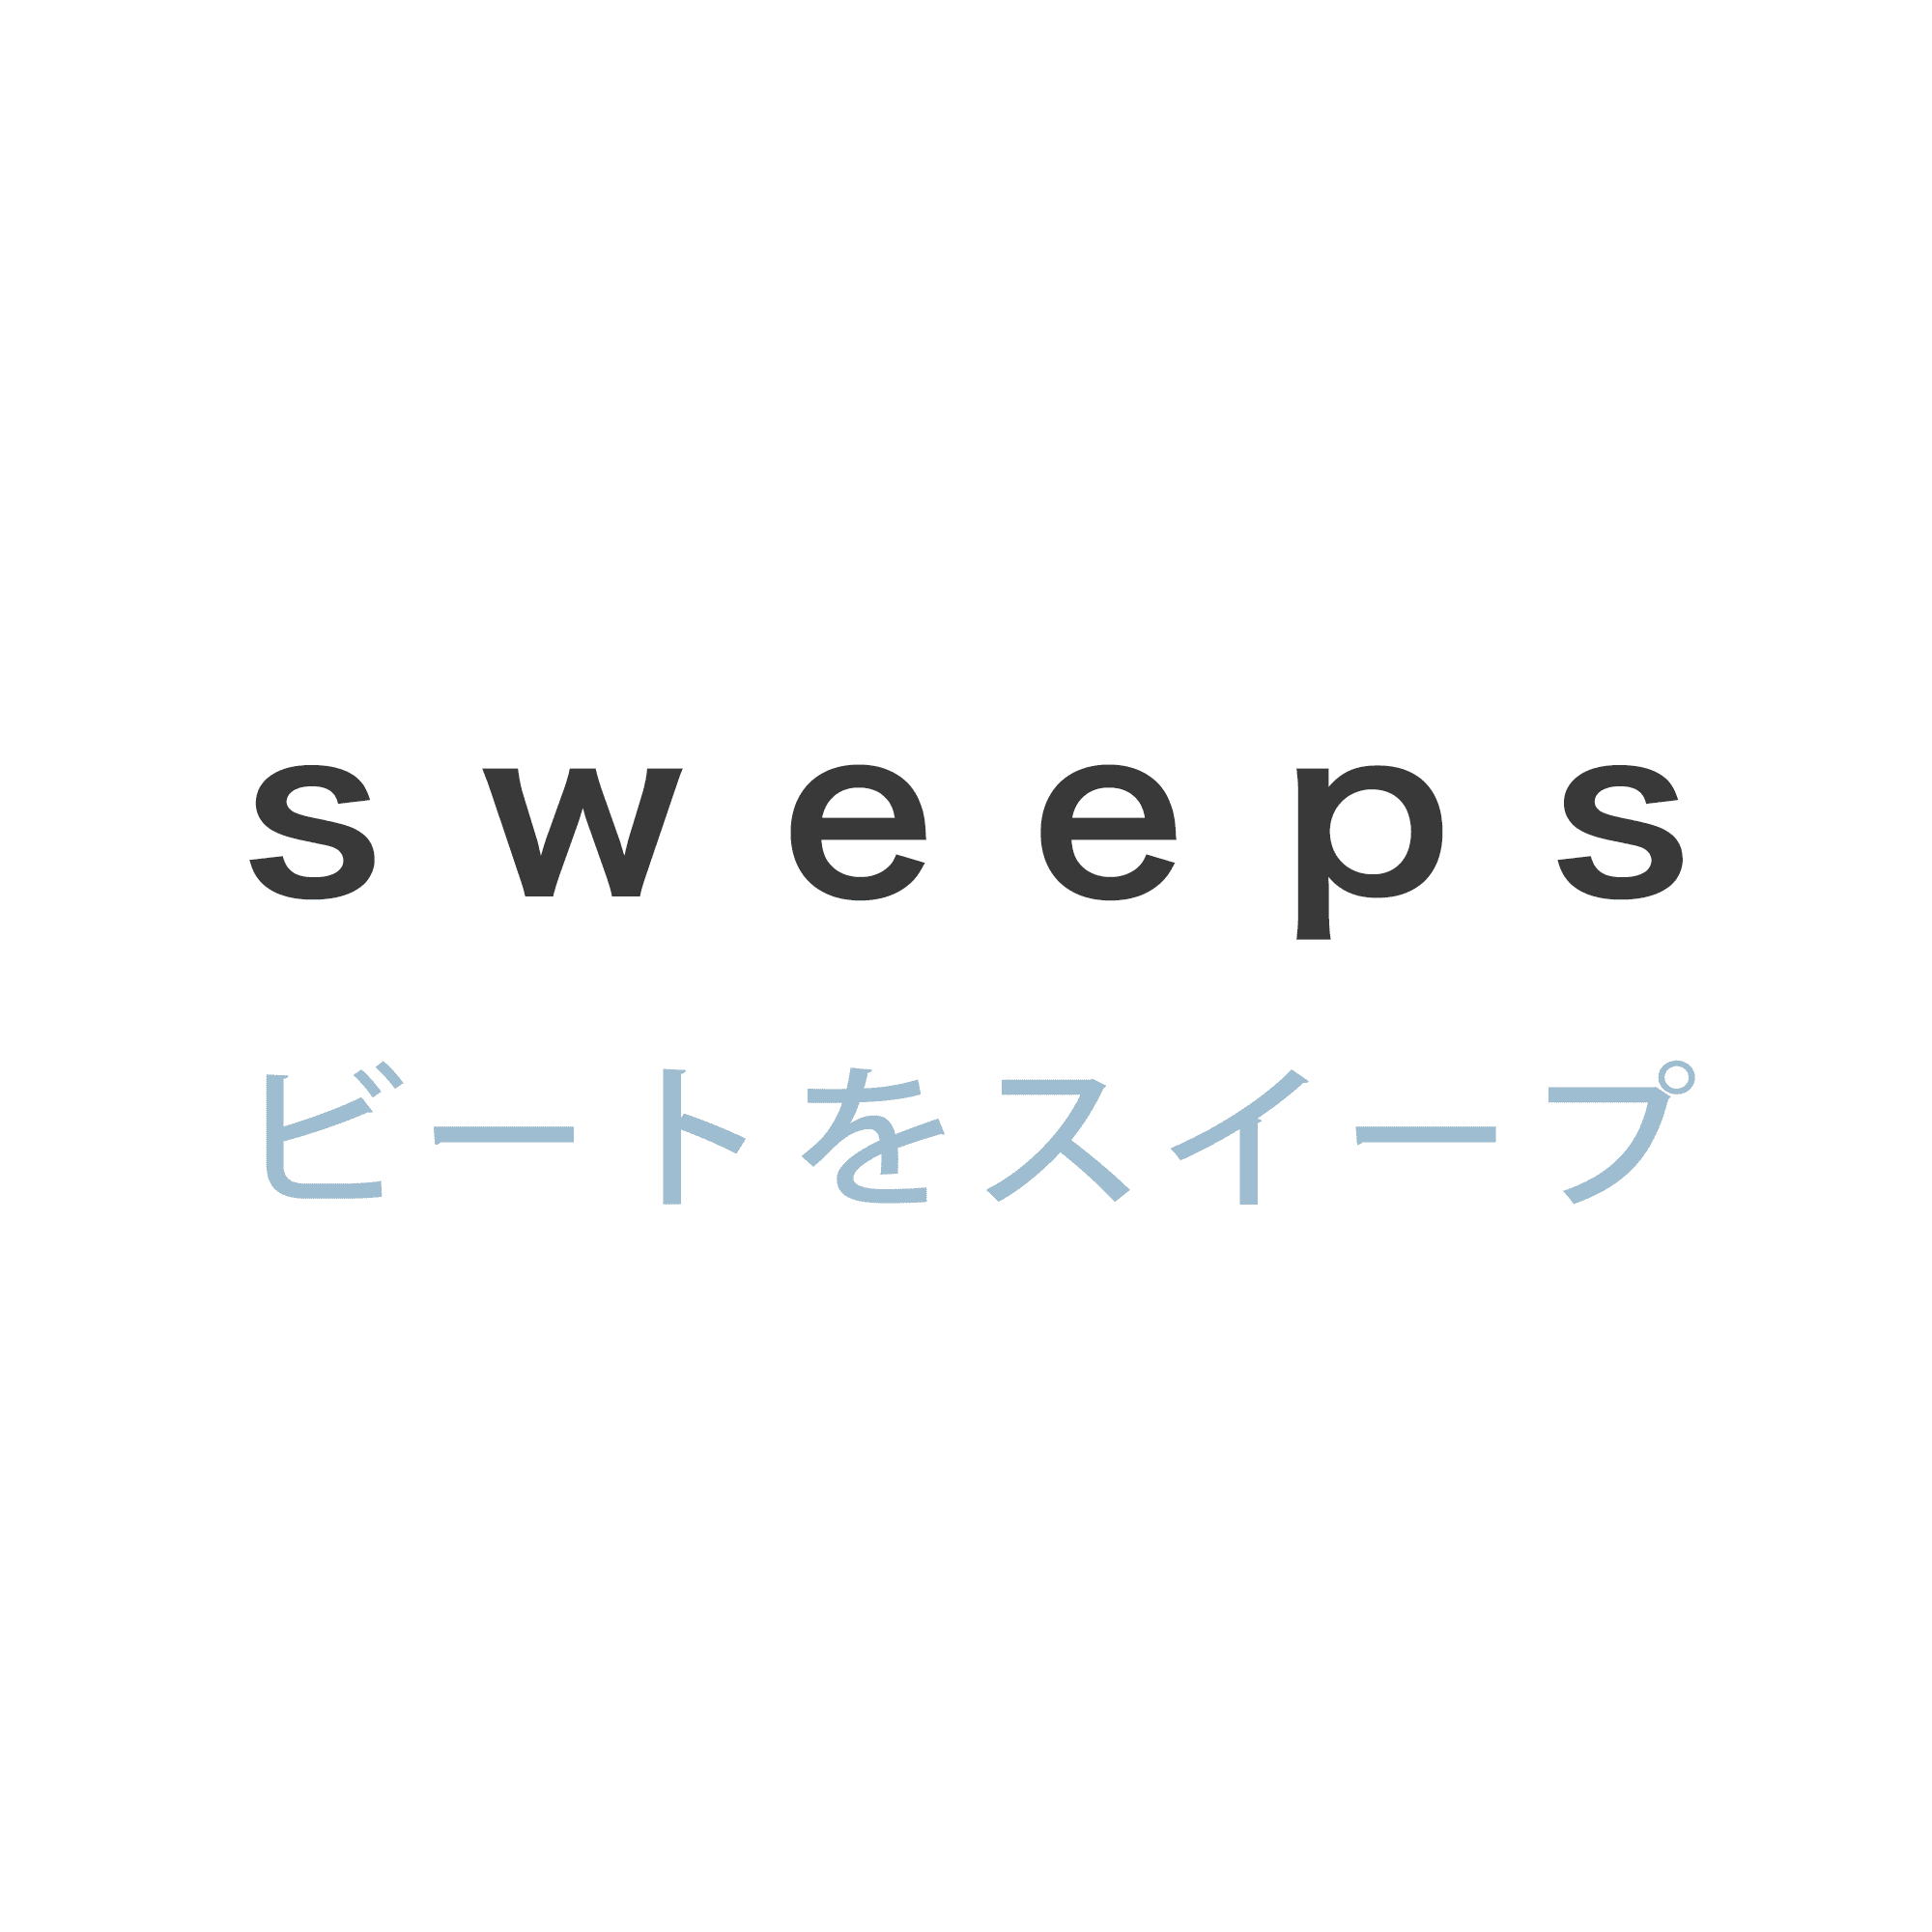 sweepsbeats